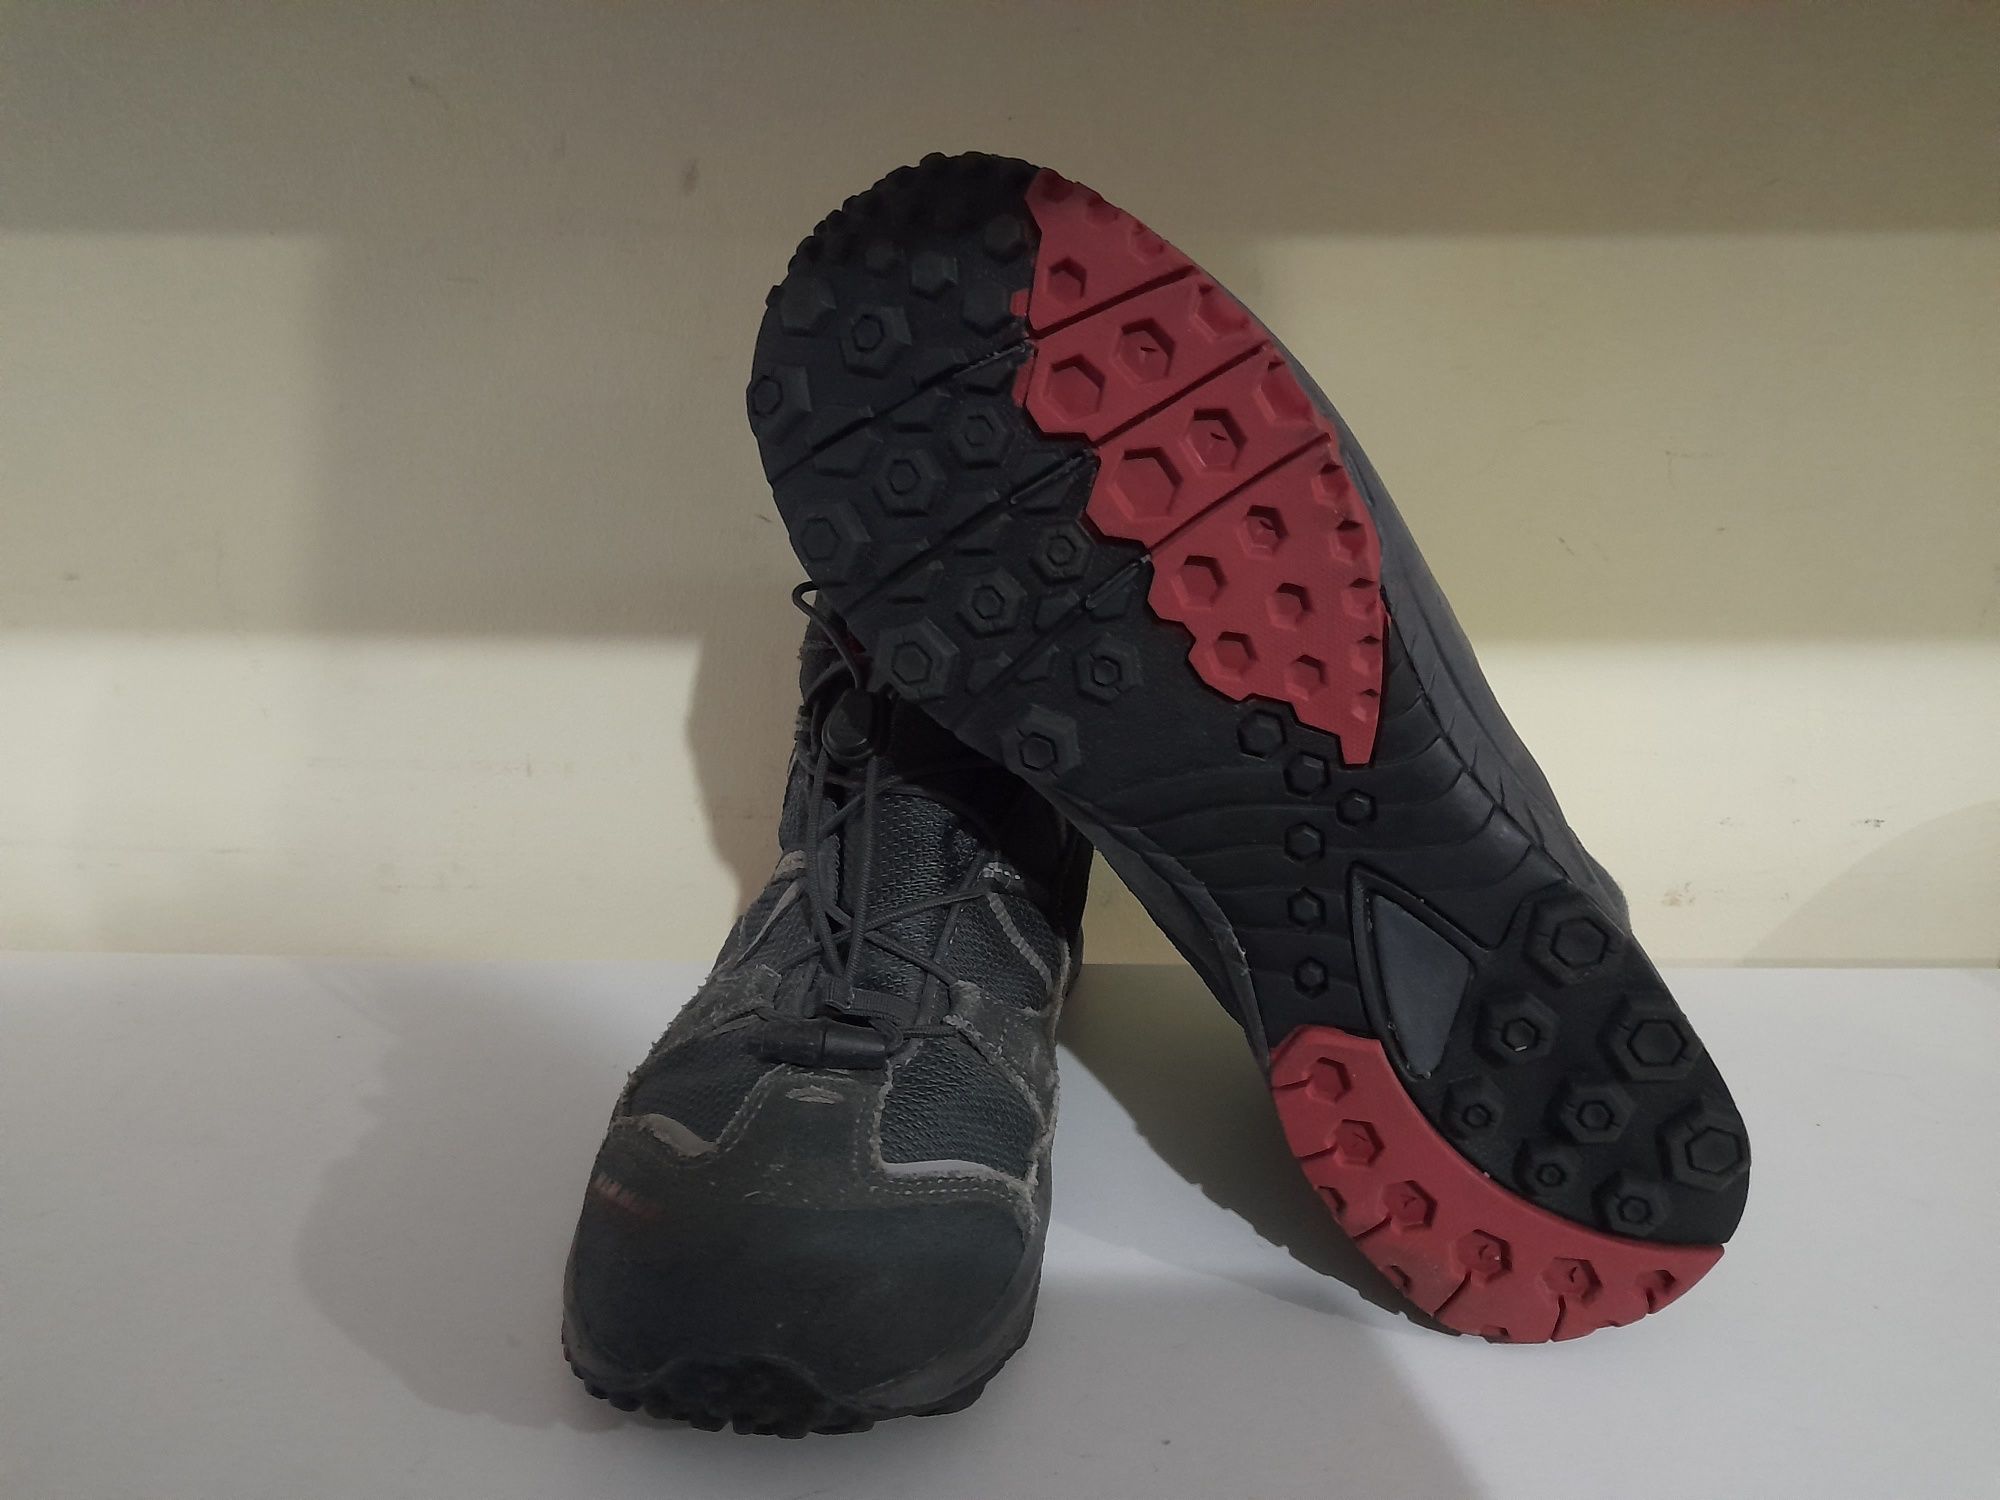 Оригинал Mammut Gore tex подростковые ботинки р. 37( 24 см )